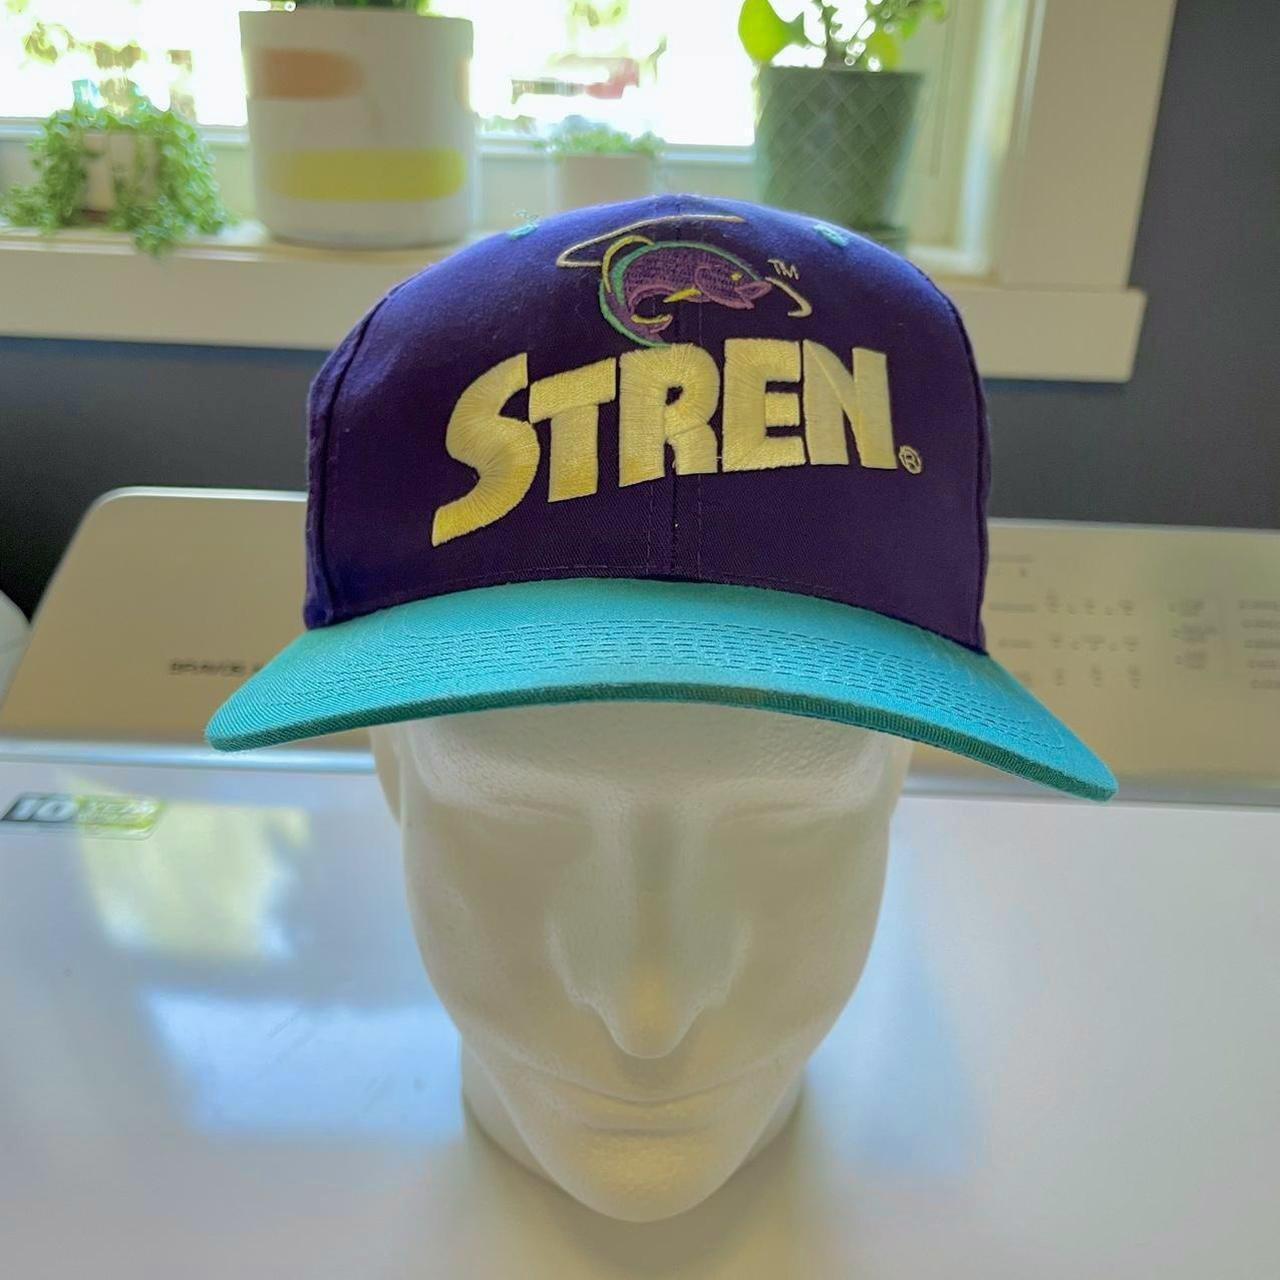 Vintage Stren Fishing Line Purple Teal Snapback Baseball Cap Hat